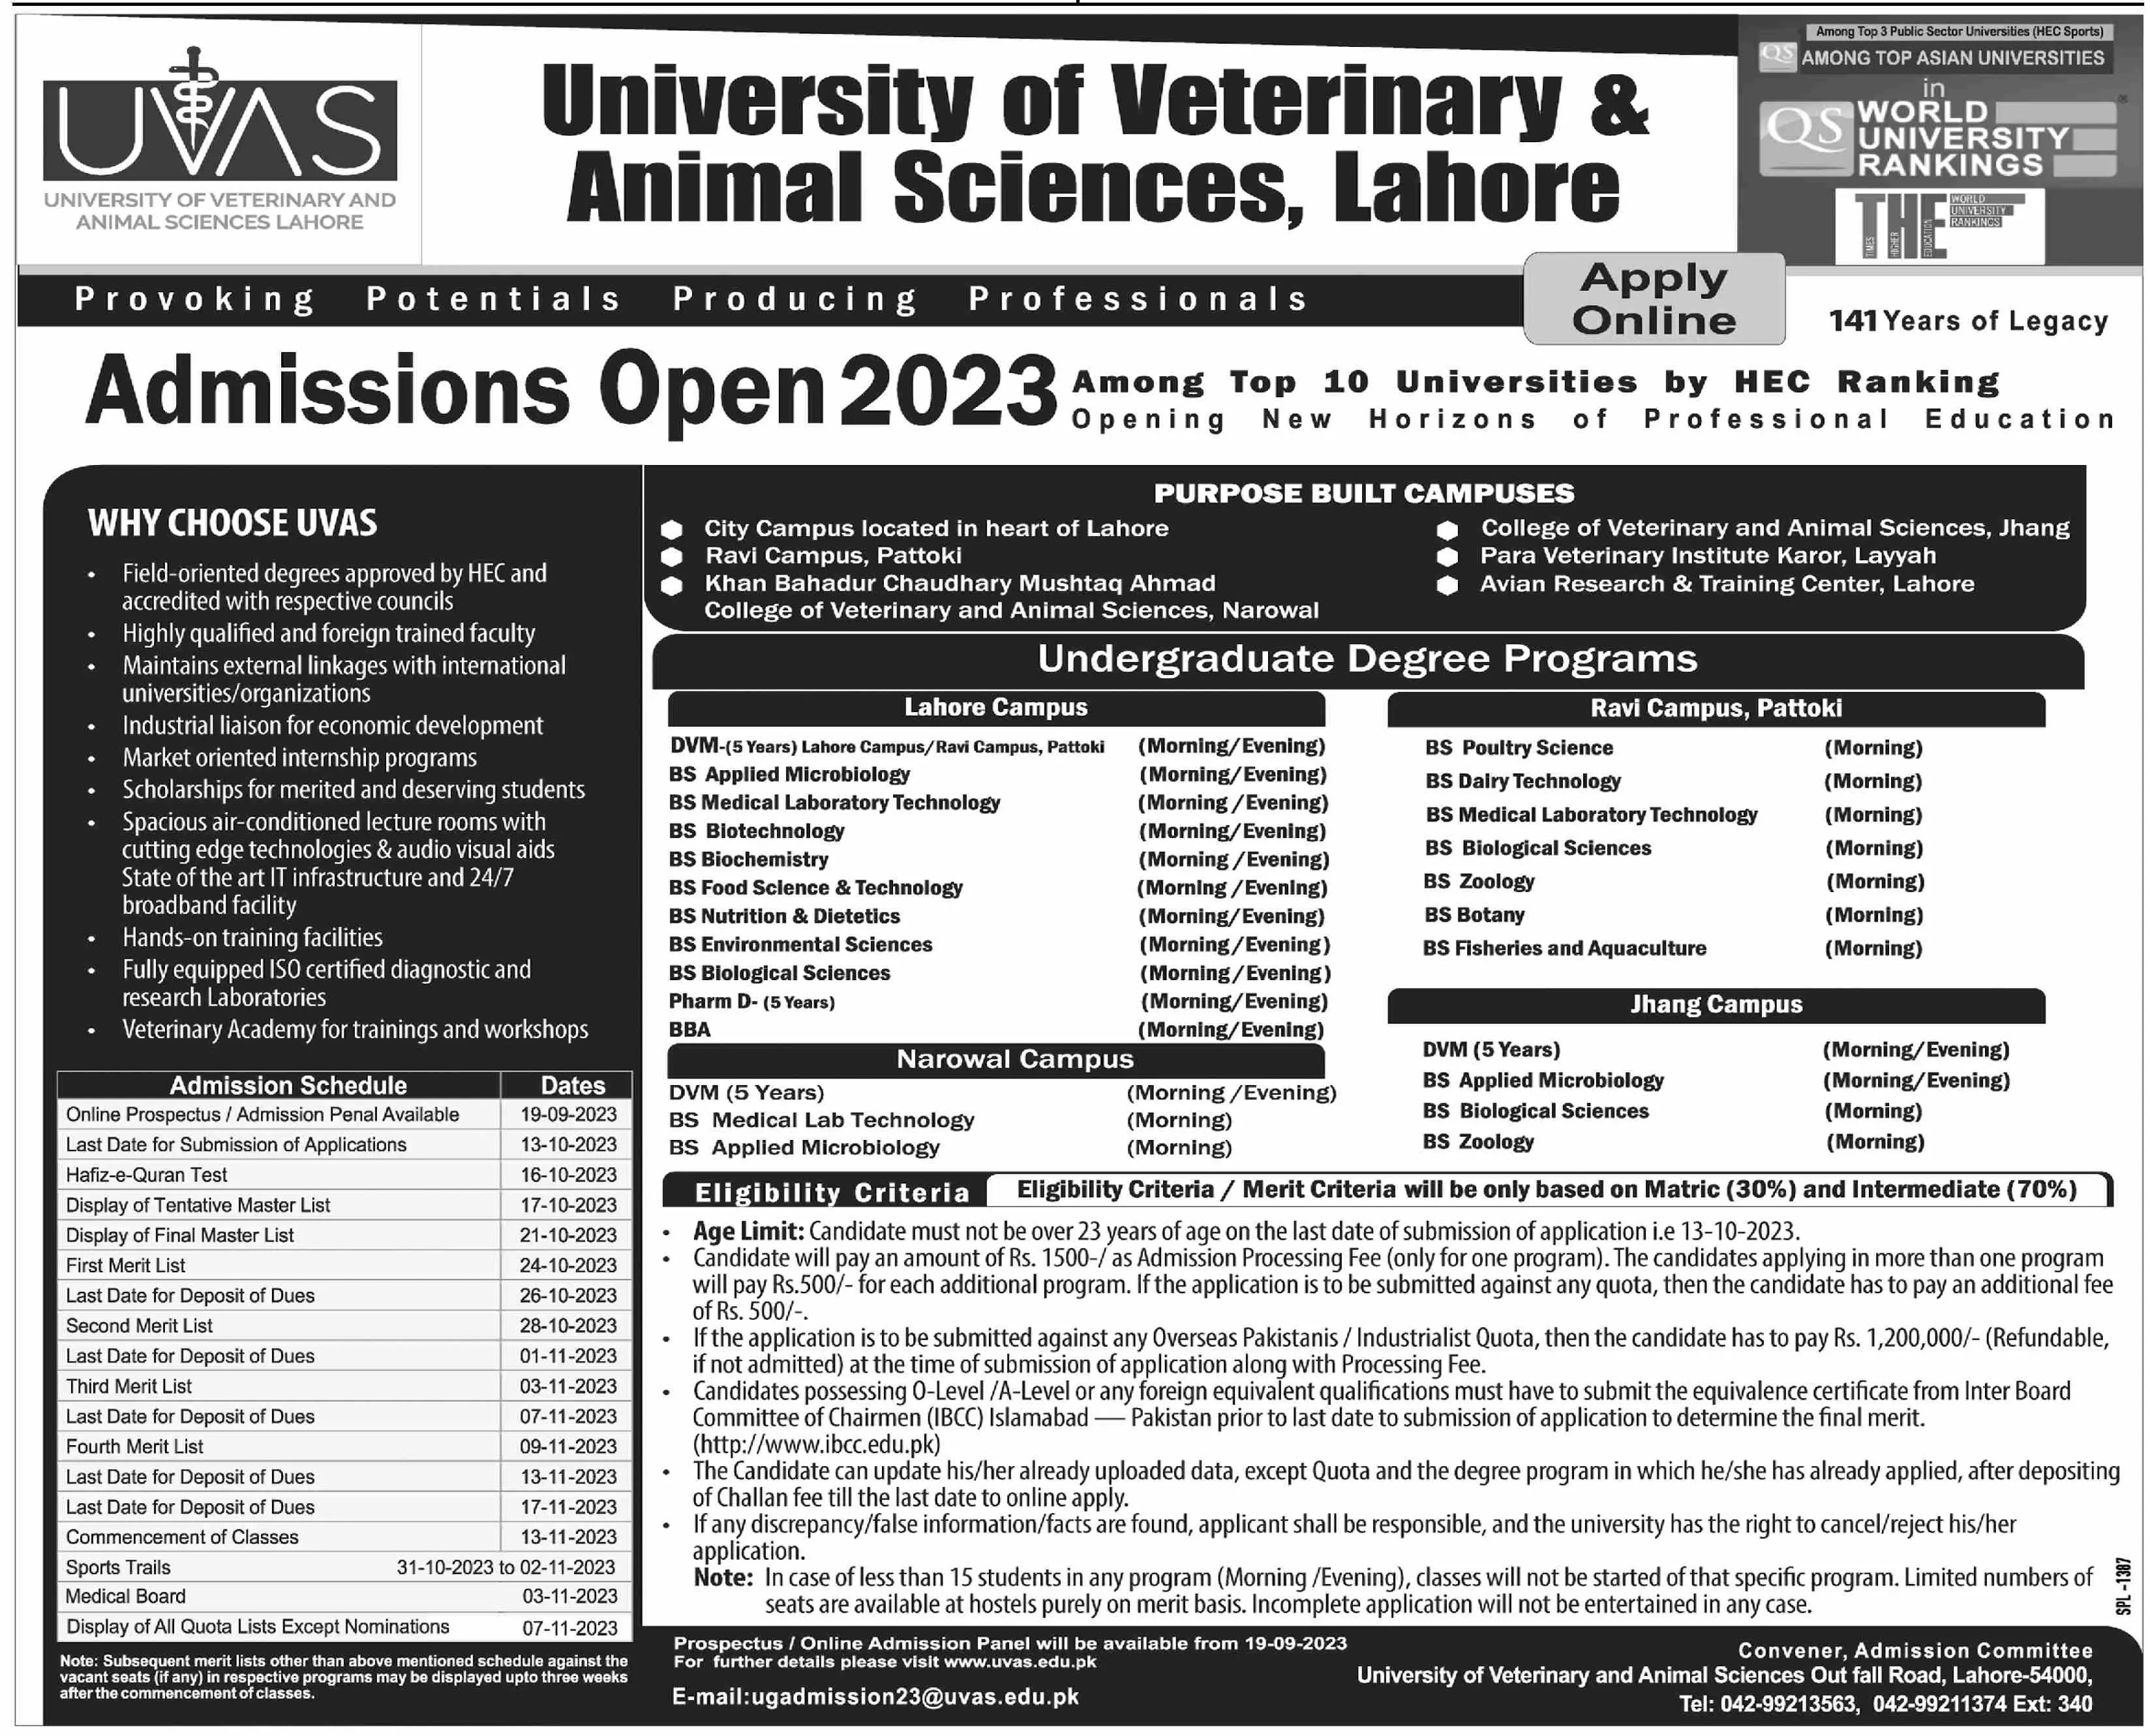 University of Veterinary & Animal Sciences Admissions 2023